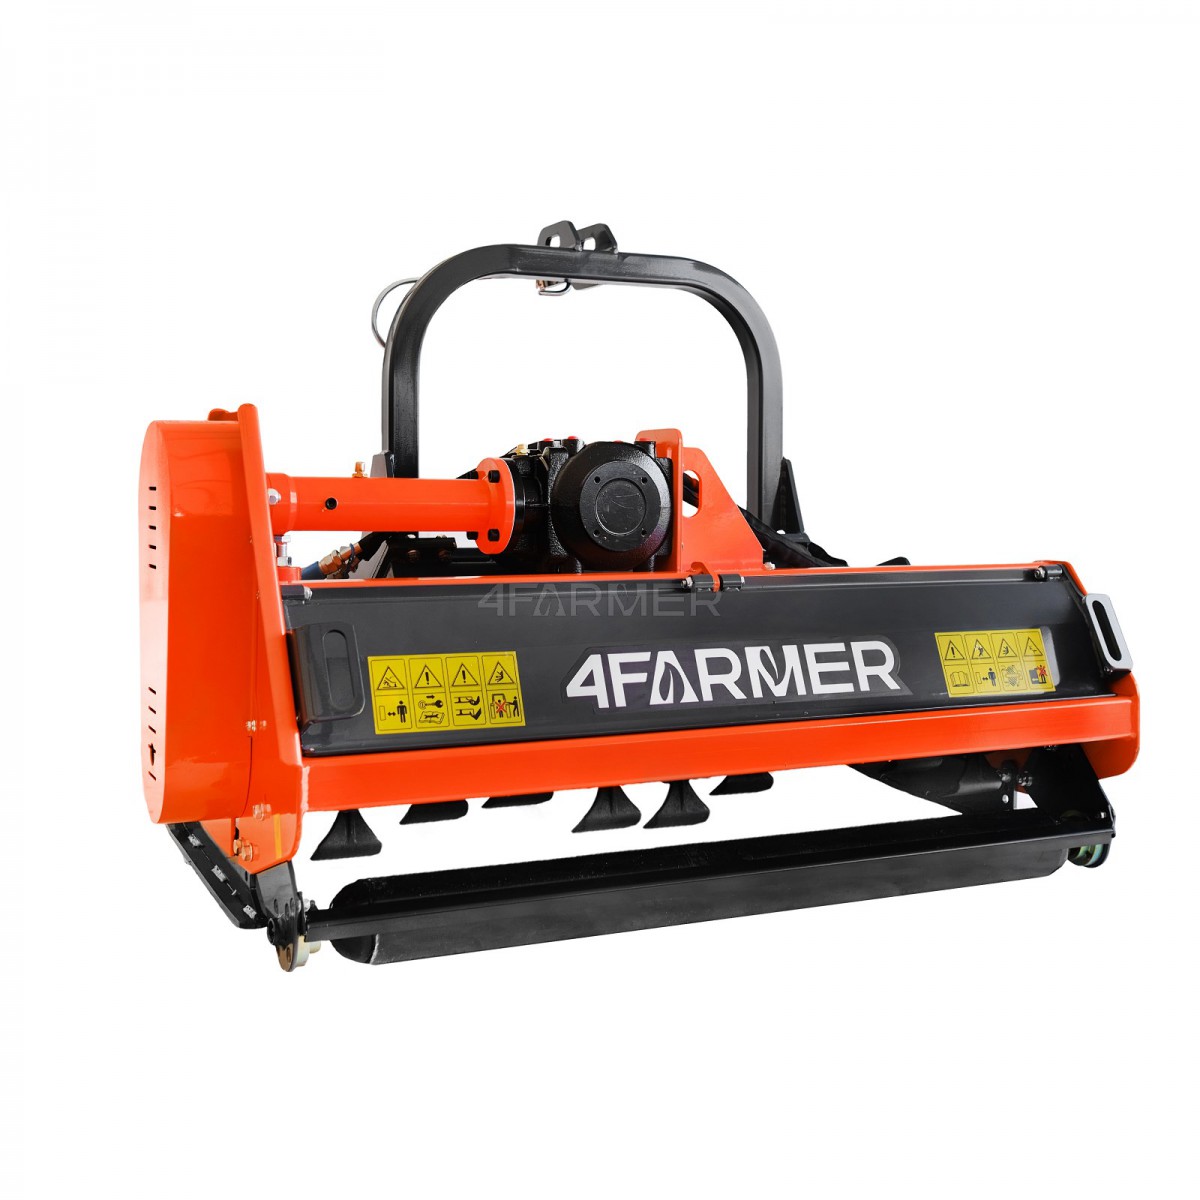 EFGCH 175D 4FARMER flail mower - orange